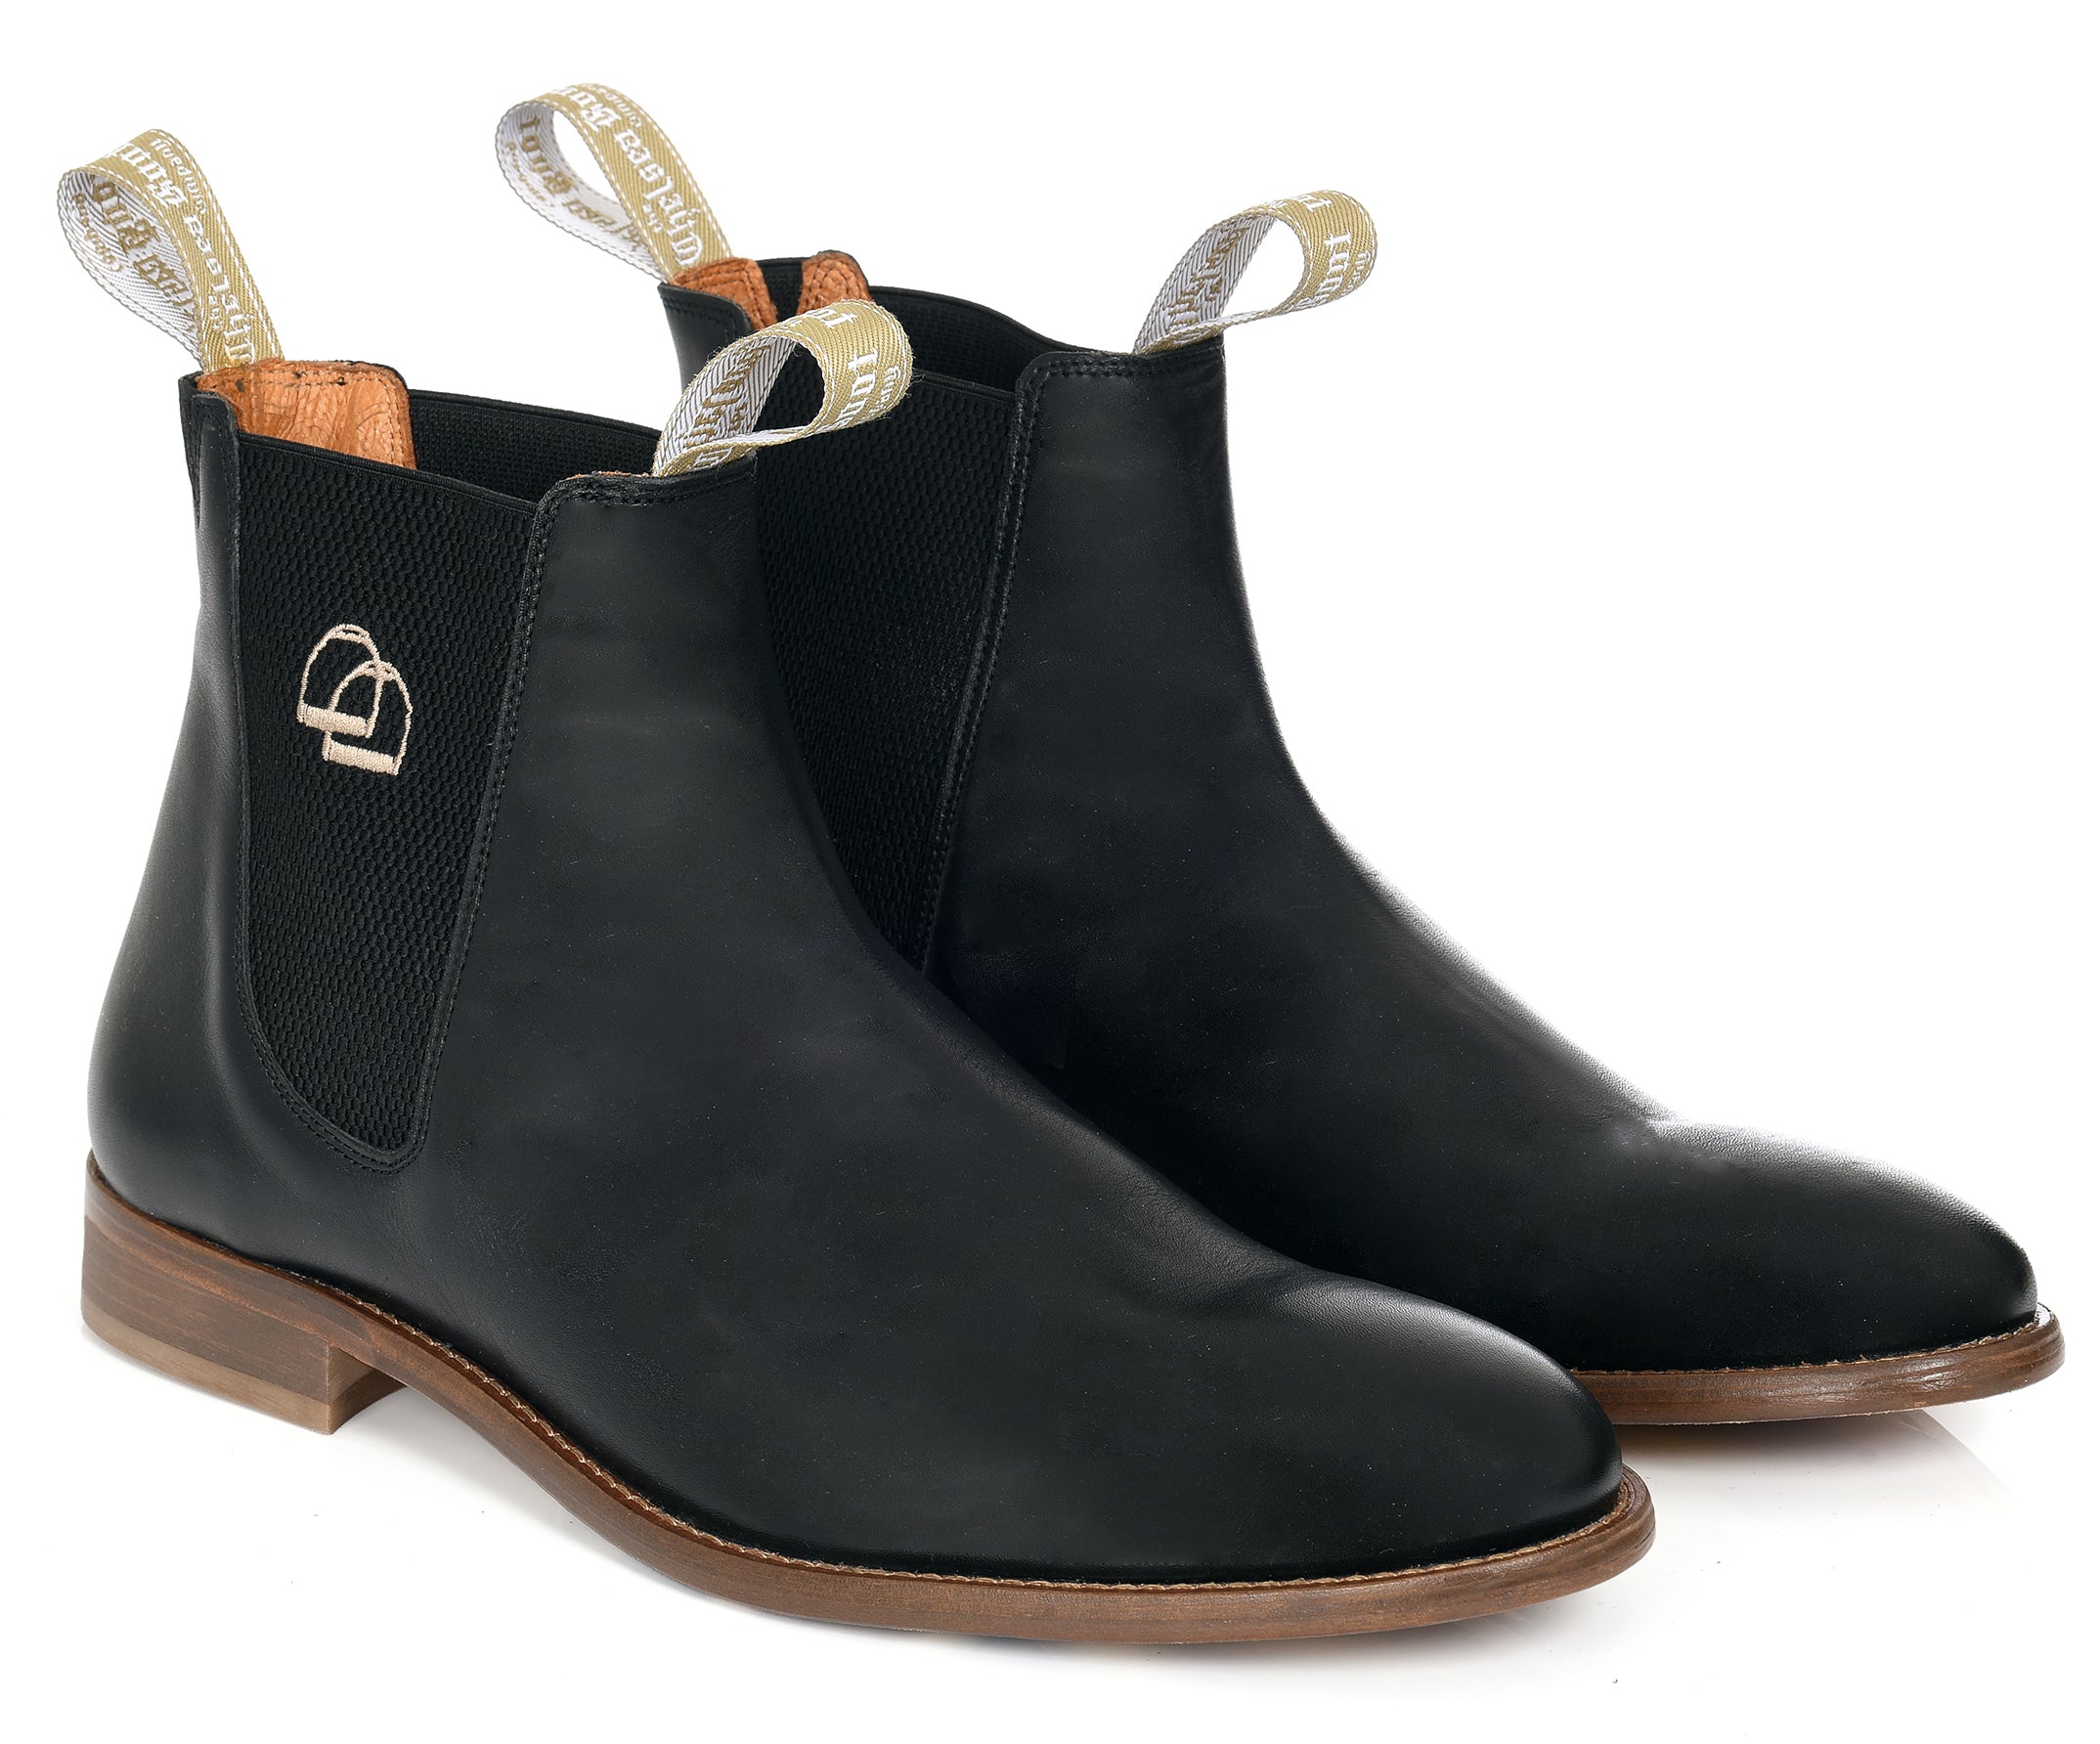 Men’s The Original Chelsea Boot - Black 12 Uk The Chelsea Boot Co Est. 1851